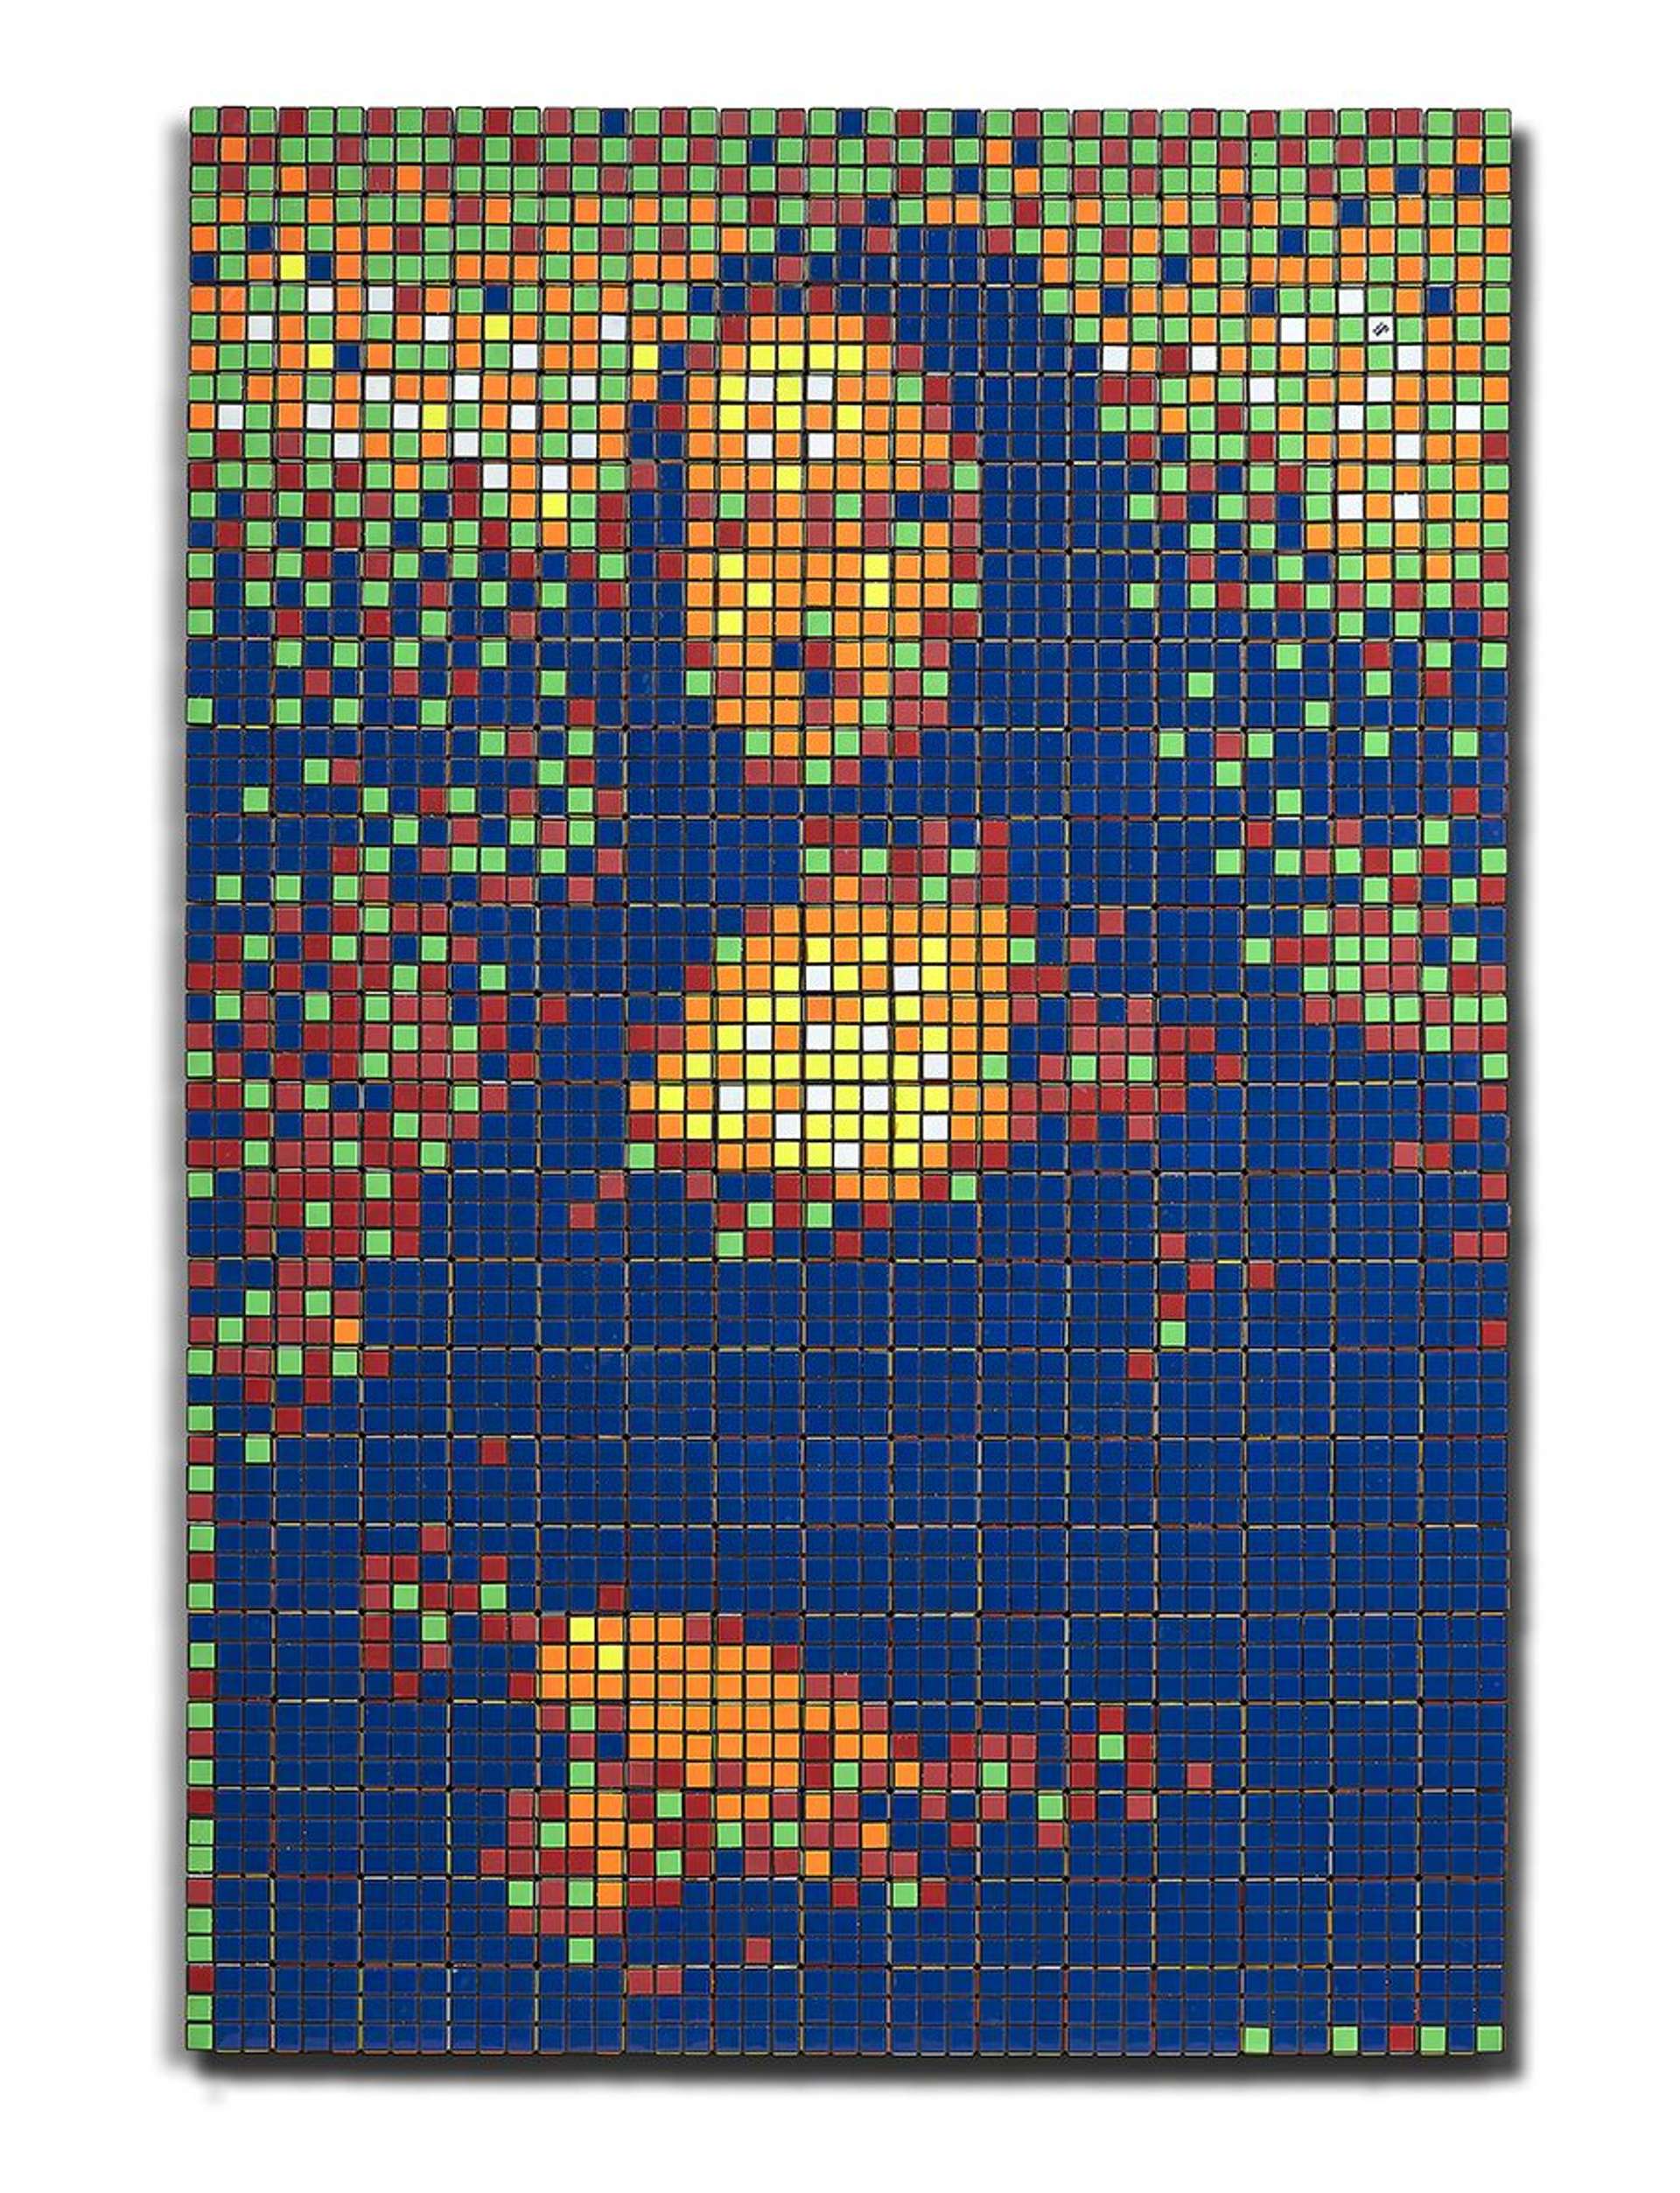 Rubik Mona Lisa (Series Rubik Masterpiece) by Invader